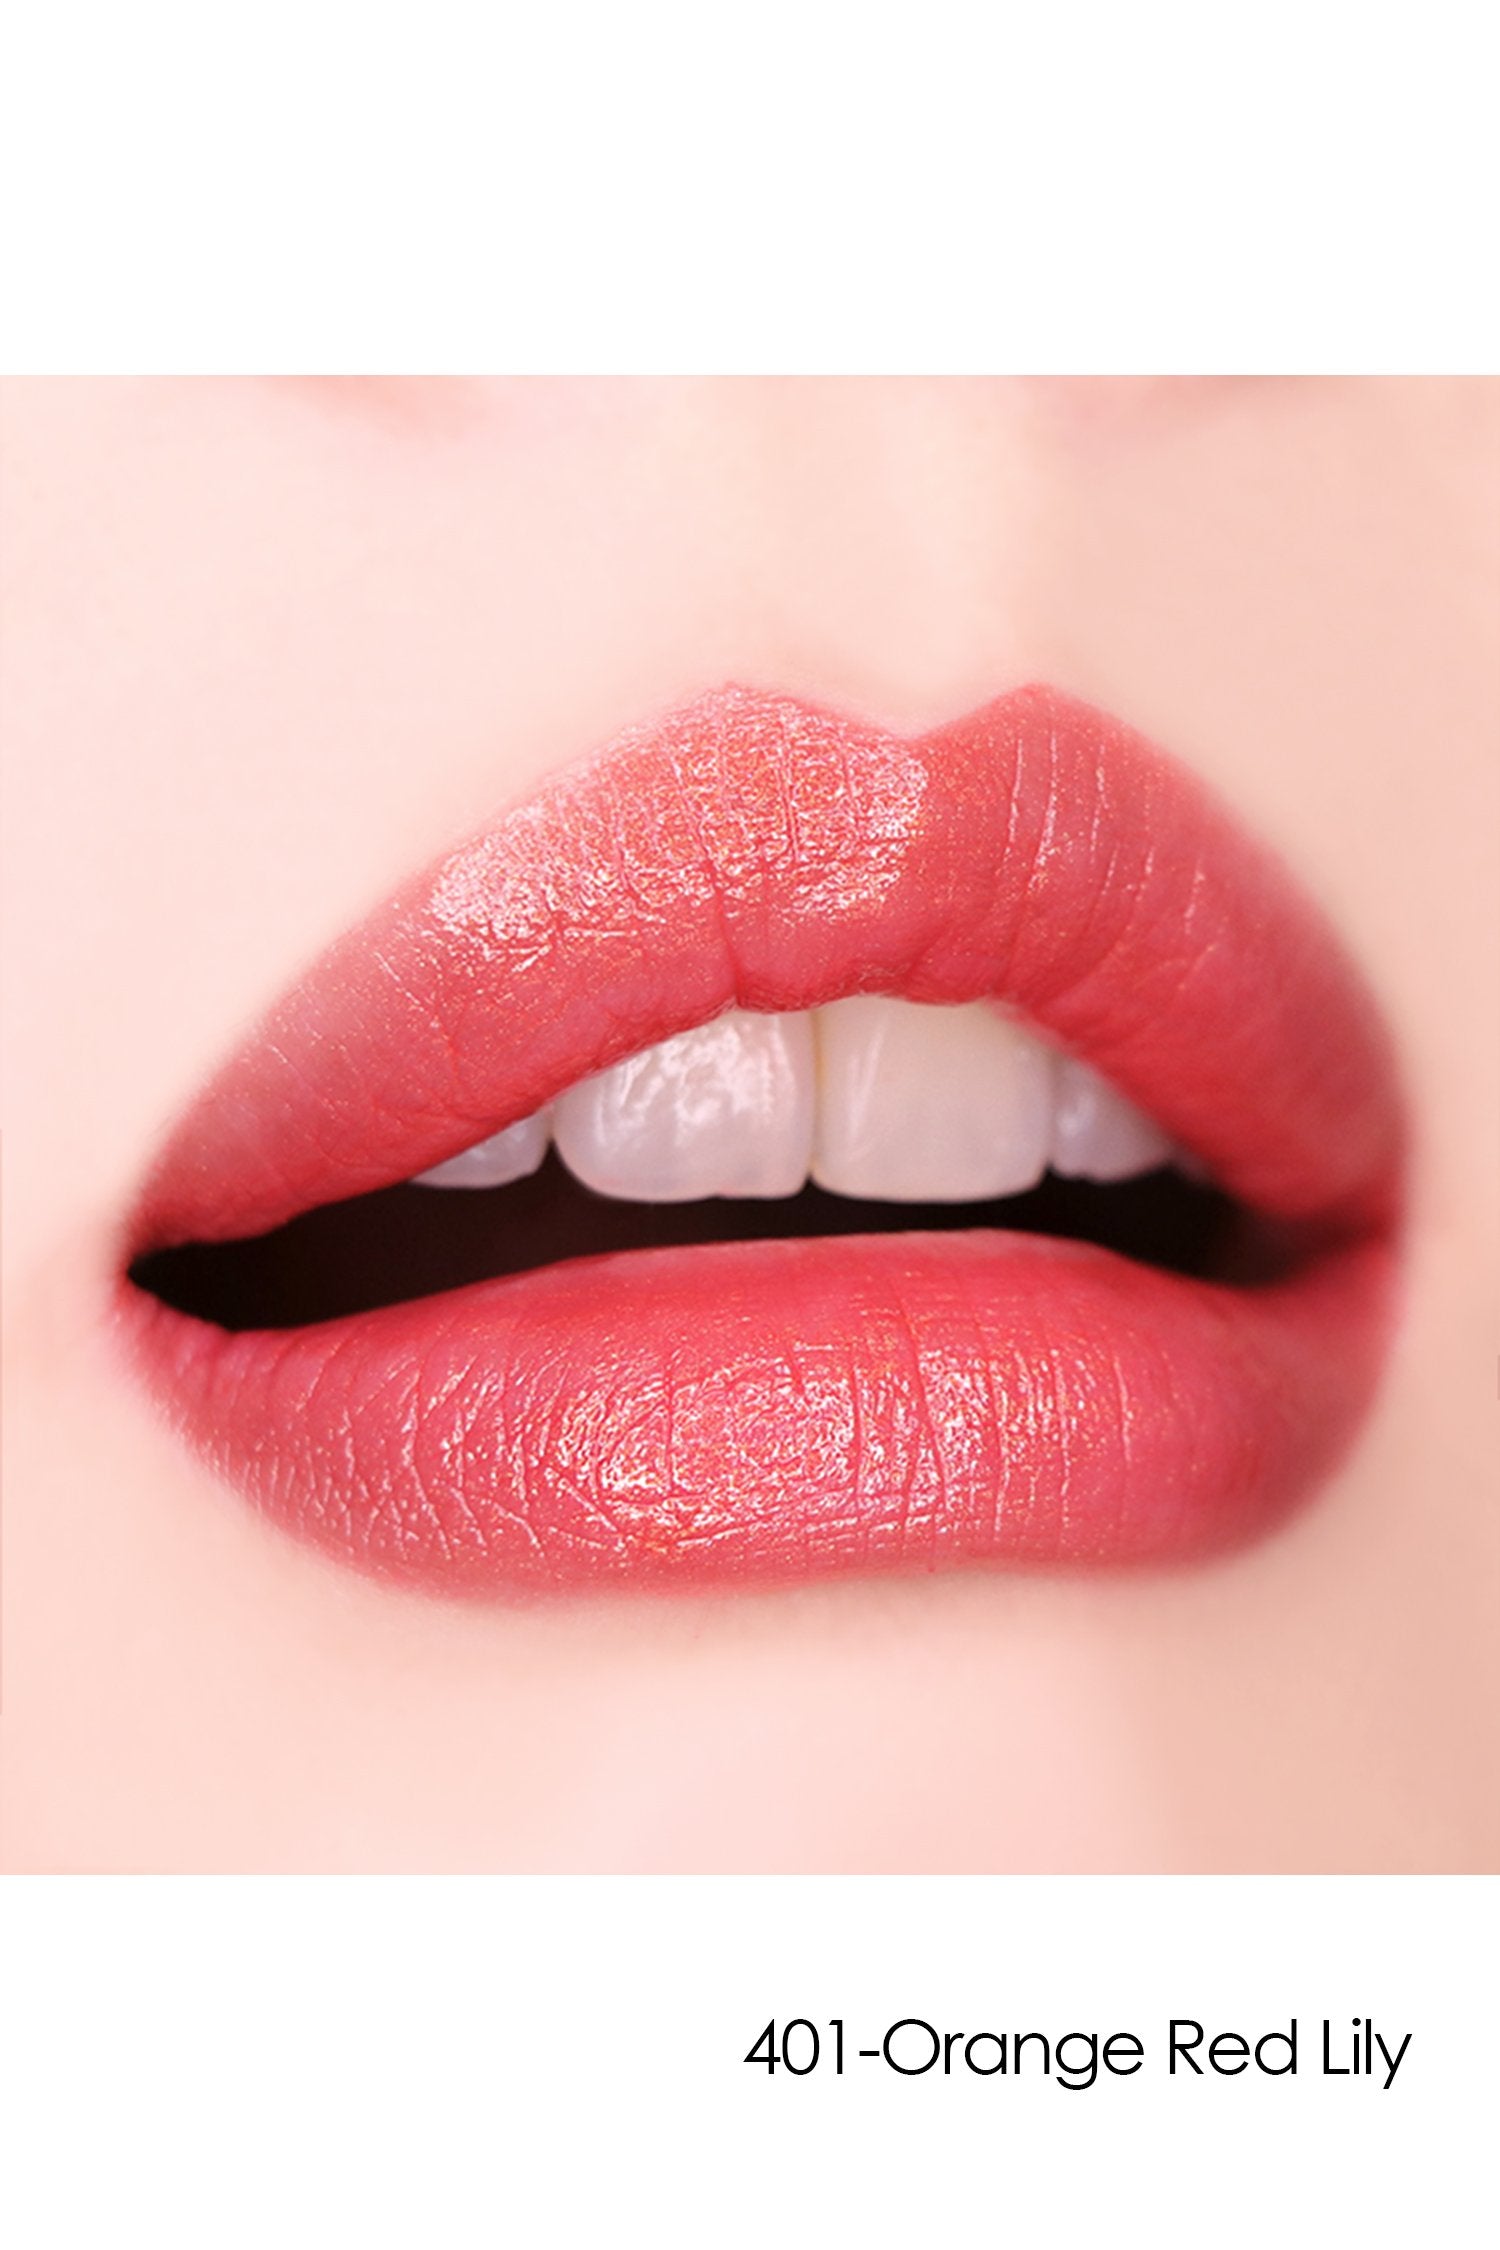 Lipstick S: Sheer Flower 401-Orange Red Lily on lips